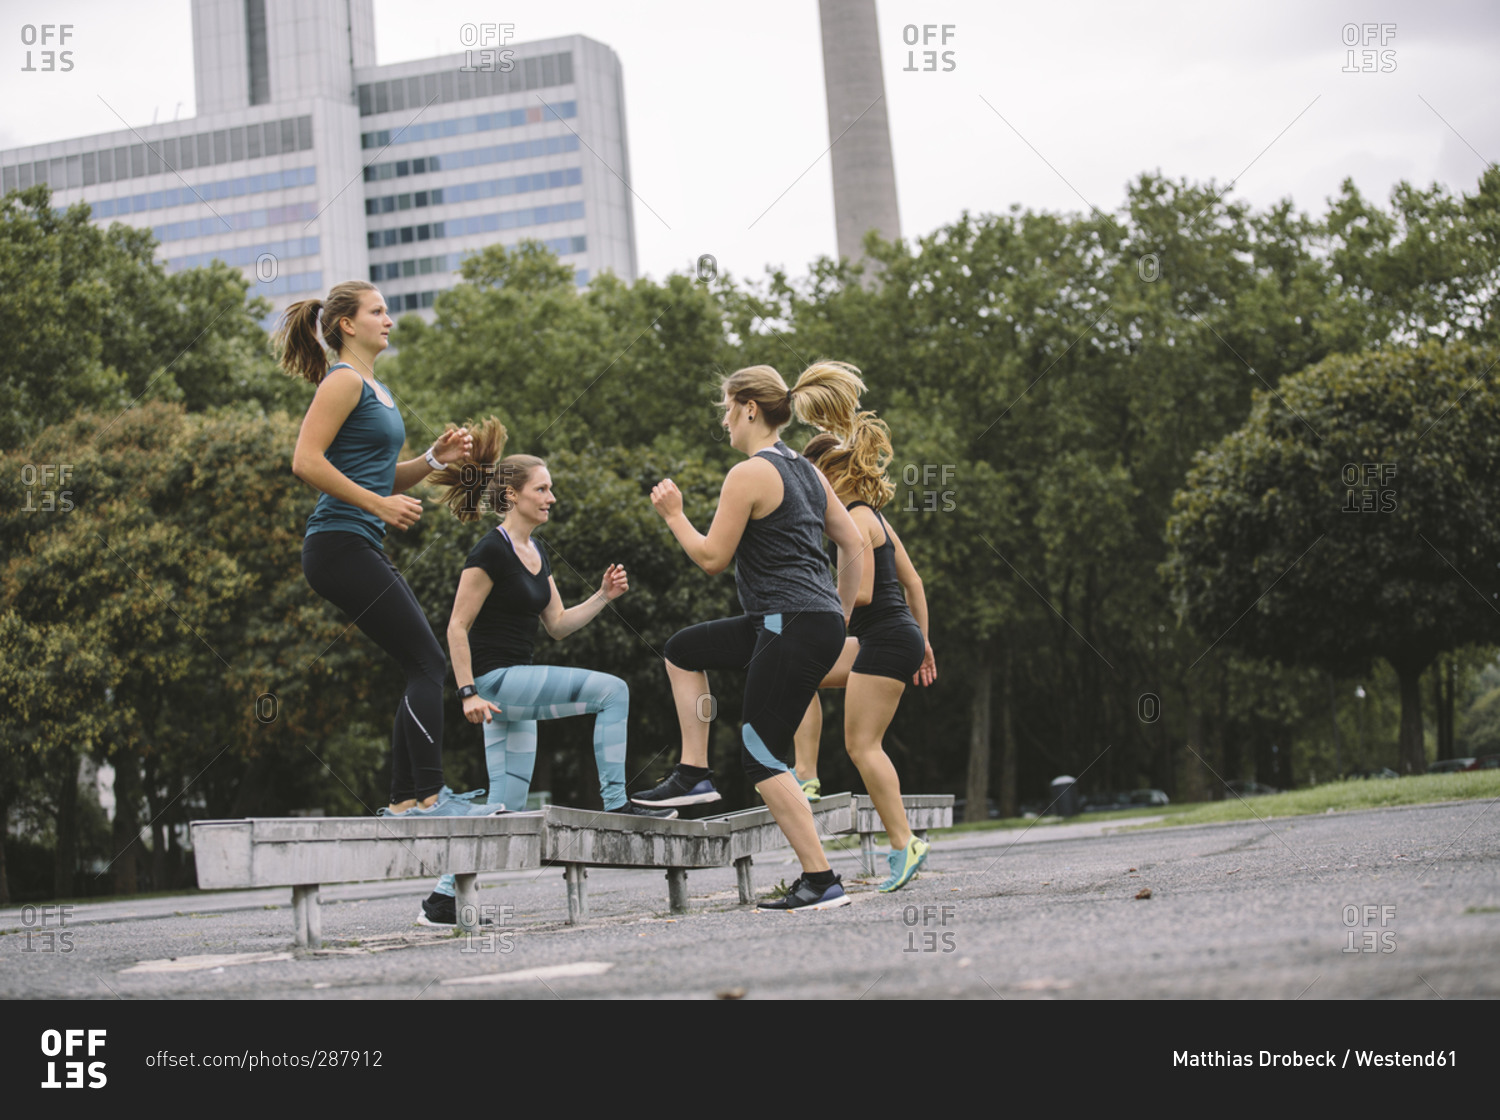 Four women doing step ups during an outdoor workout